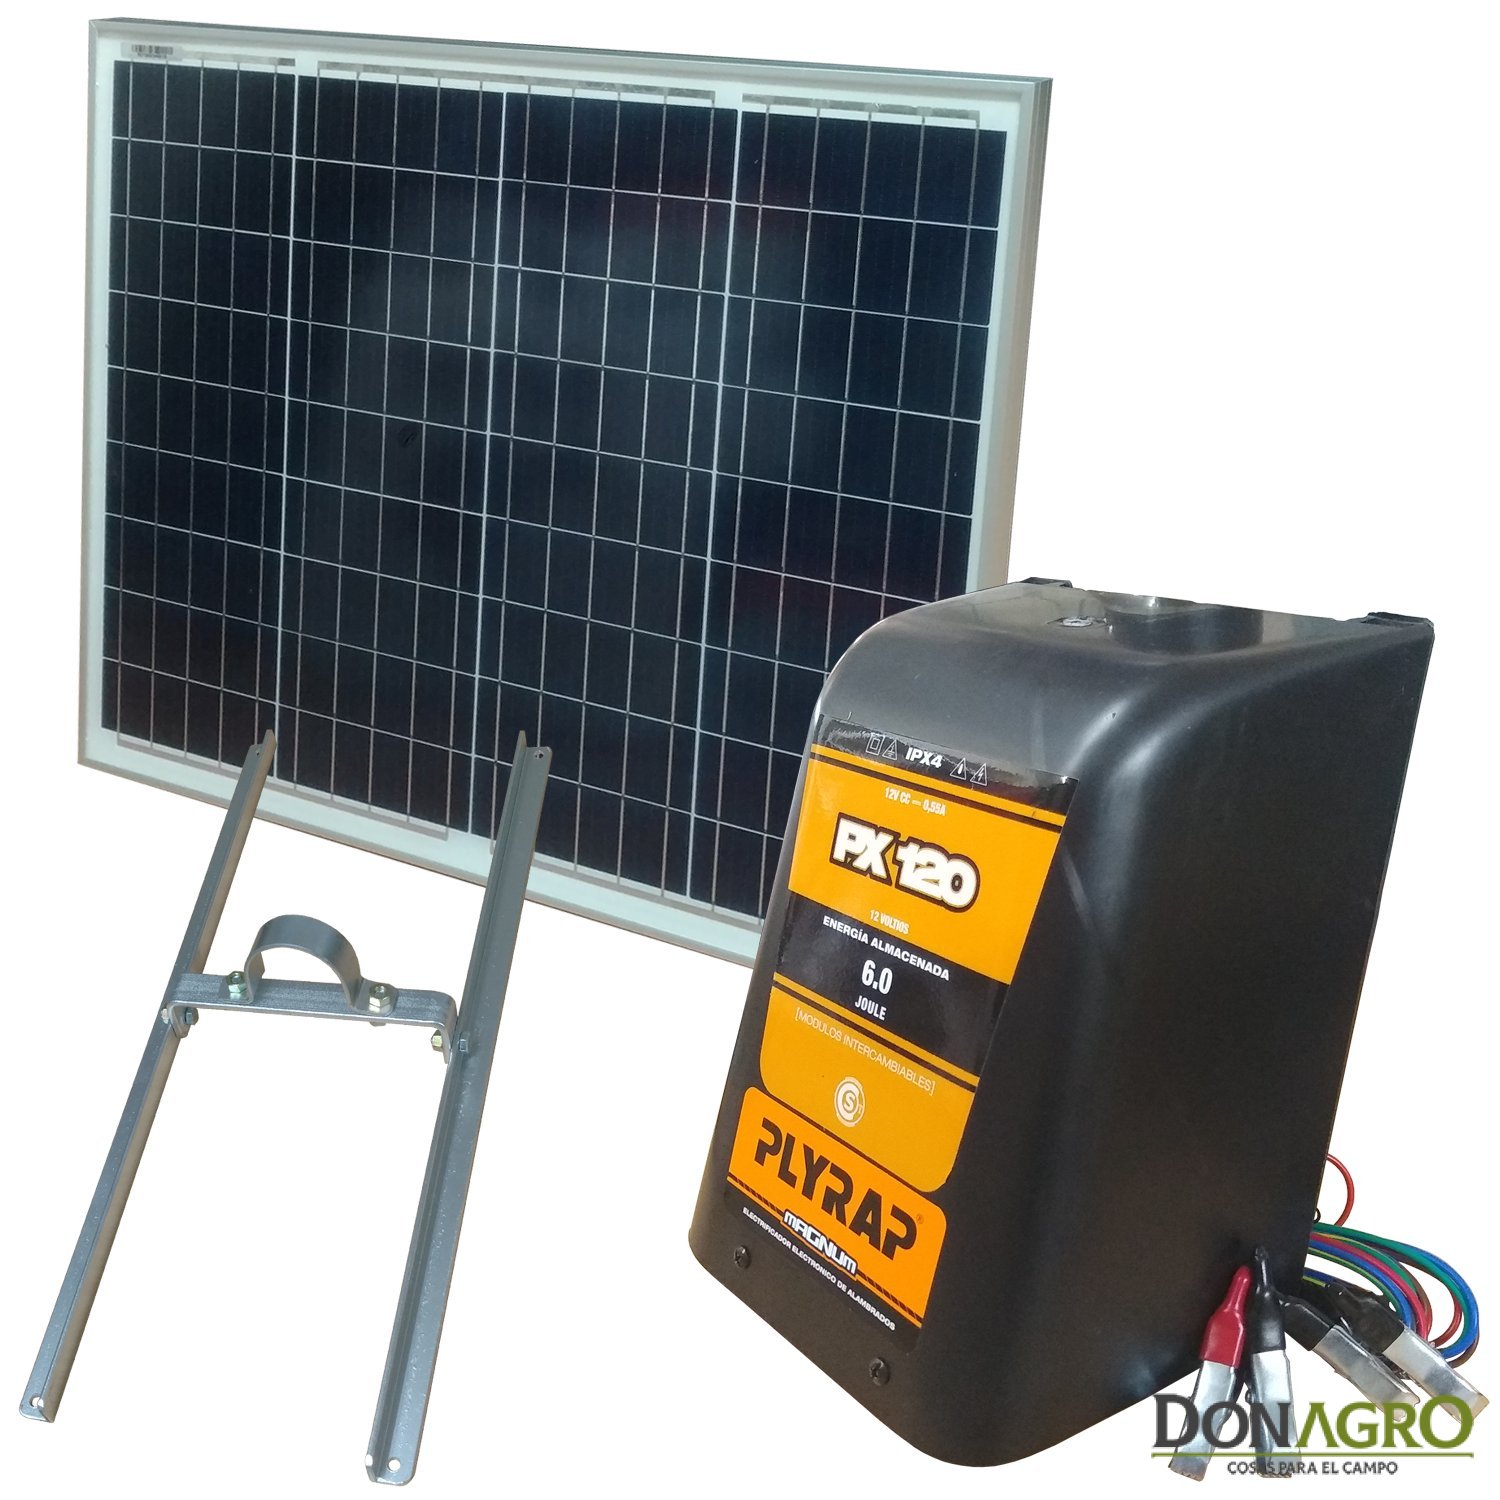 Boyero Electrificador Solar Plyrap ENERTIK 6.0j 120km